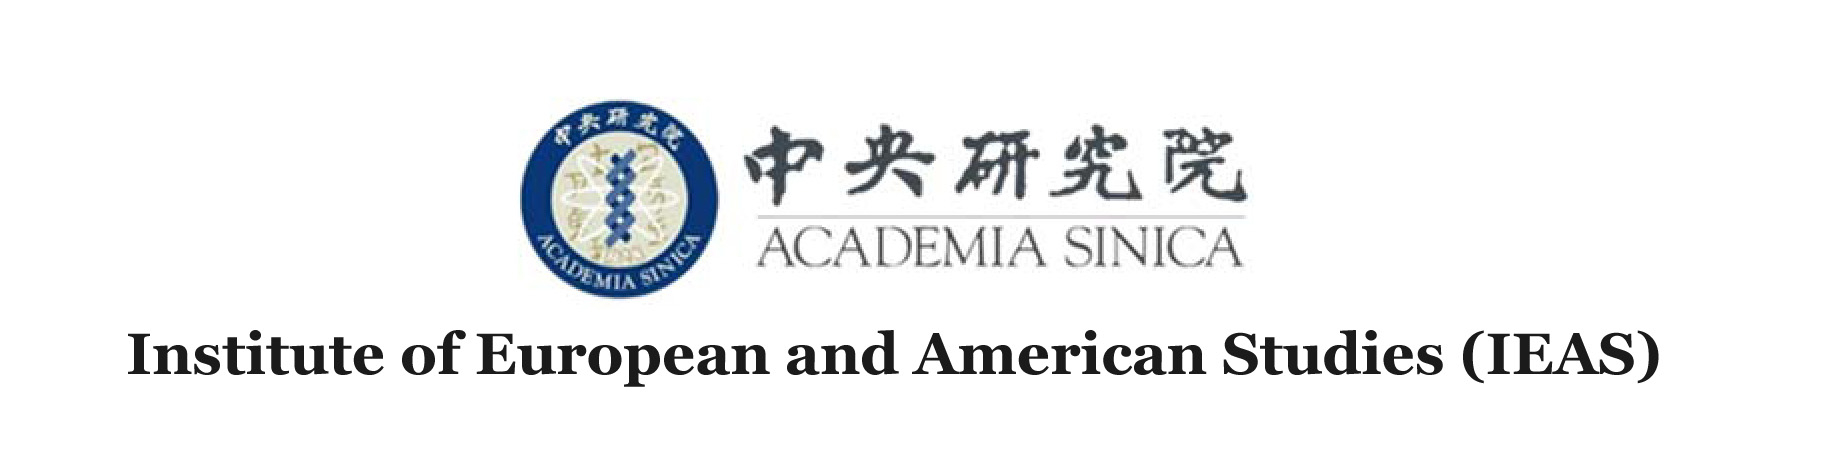 /assets/contentimages/Institute_of_European_and_American_Studies2C_Academia_Sinica.jpg